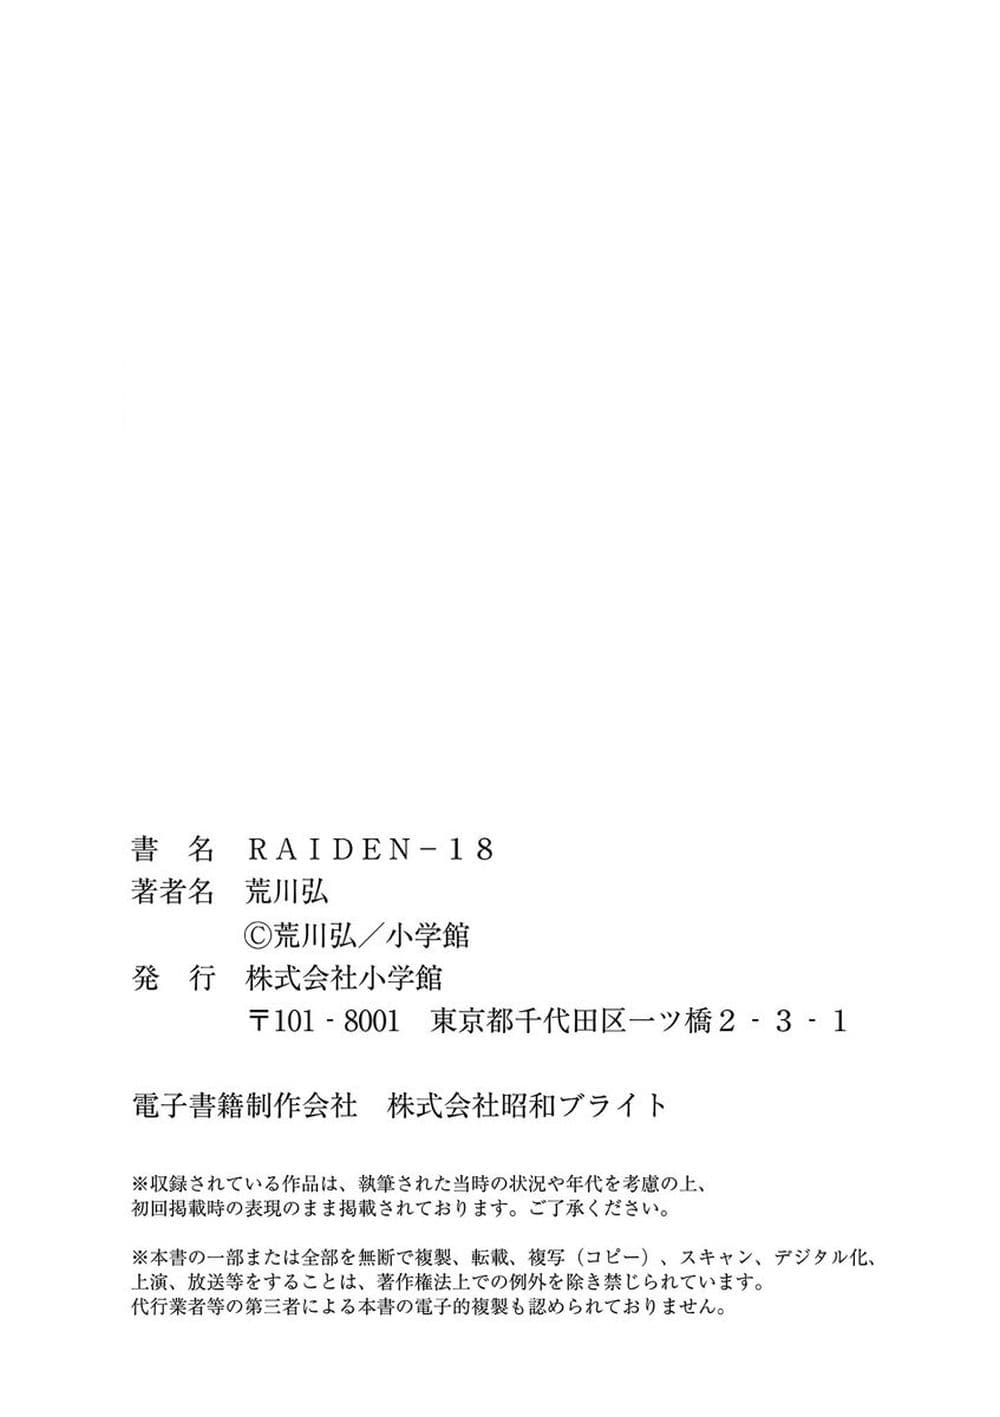 Raiden-18 4-4